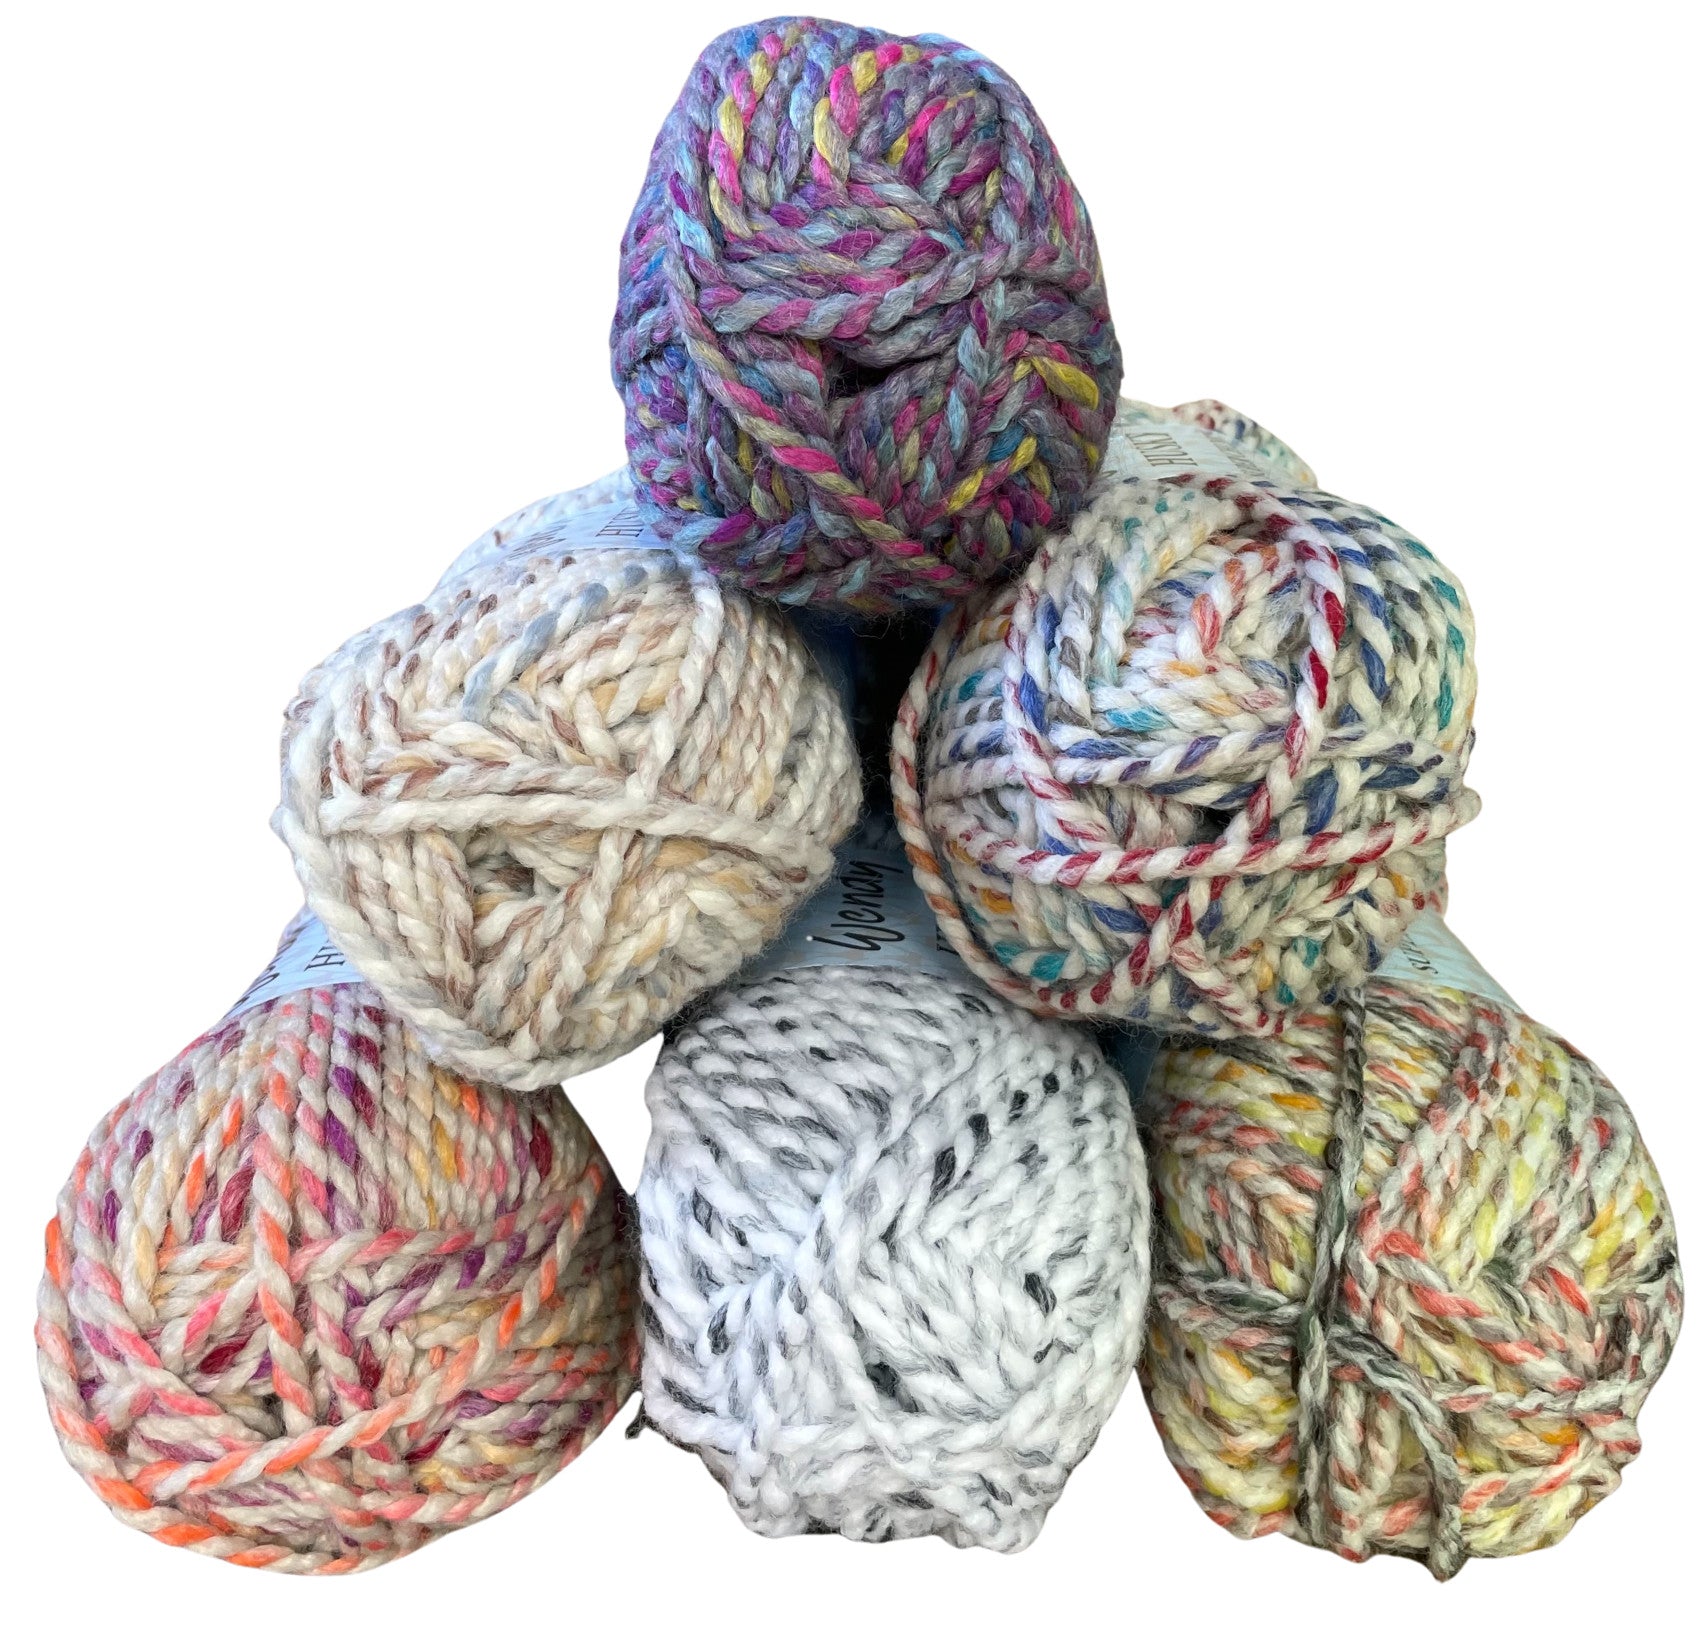 Wendy Wools Husky Super Chunky Knitting Yarn 100g (6 Shades